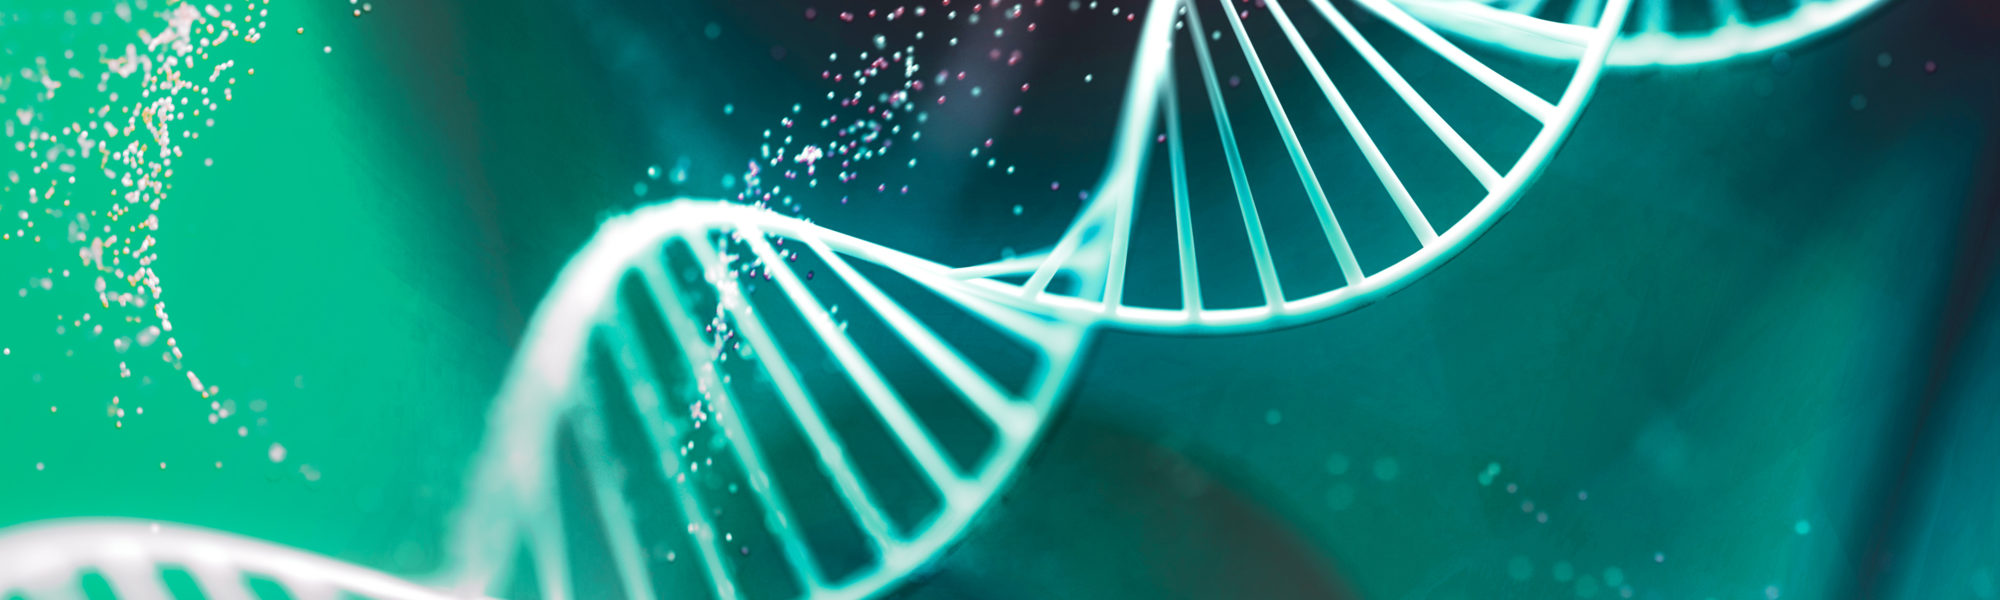 3d render image of a human DNA